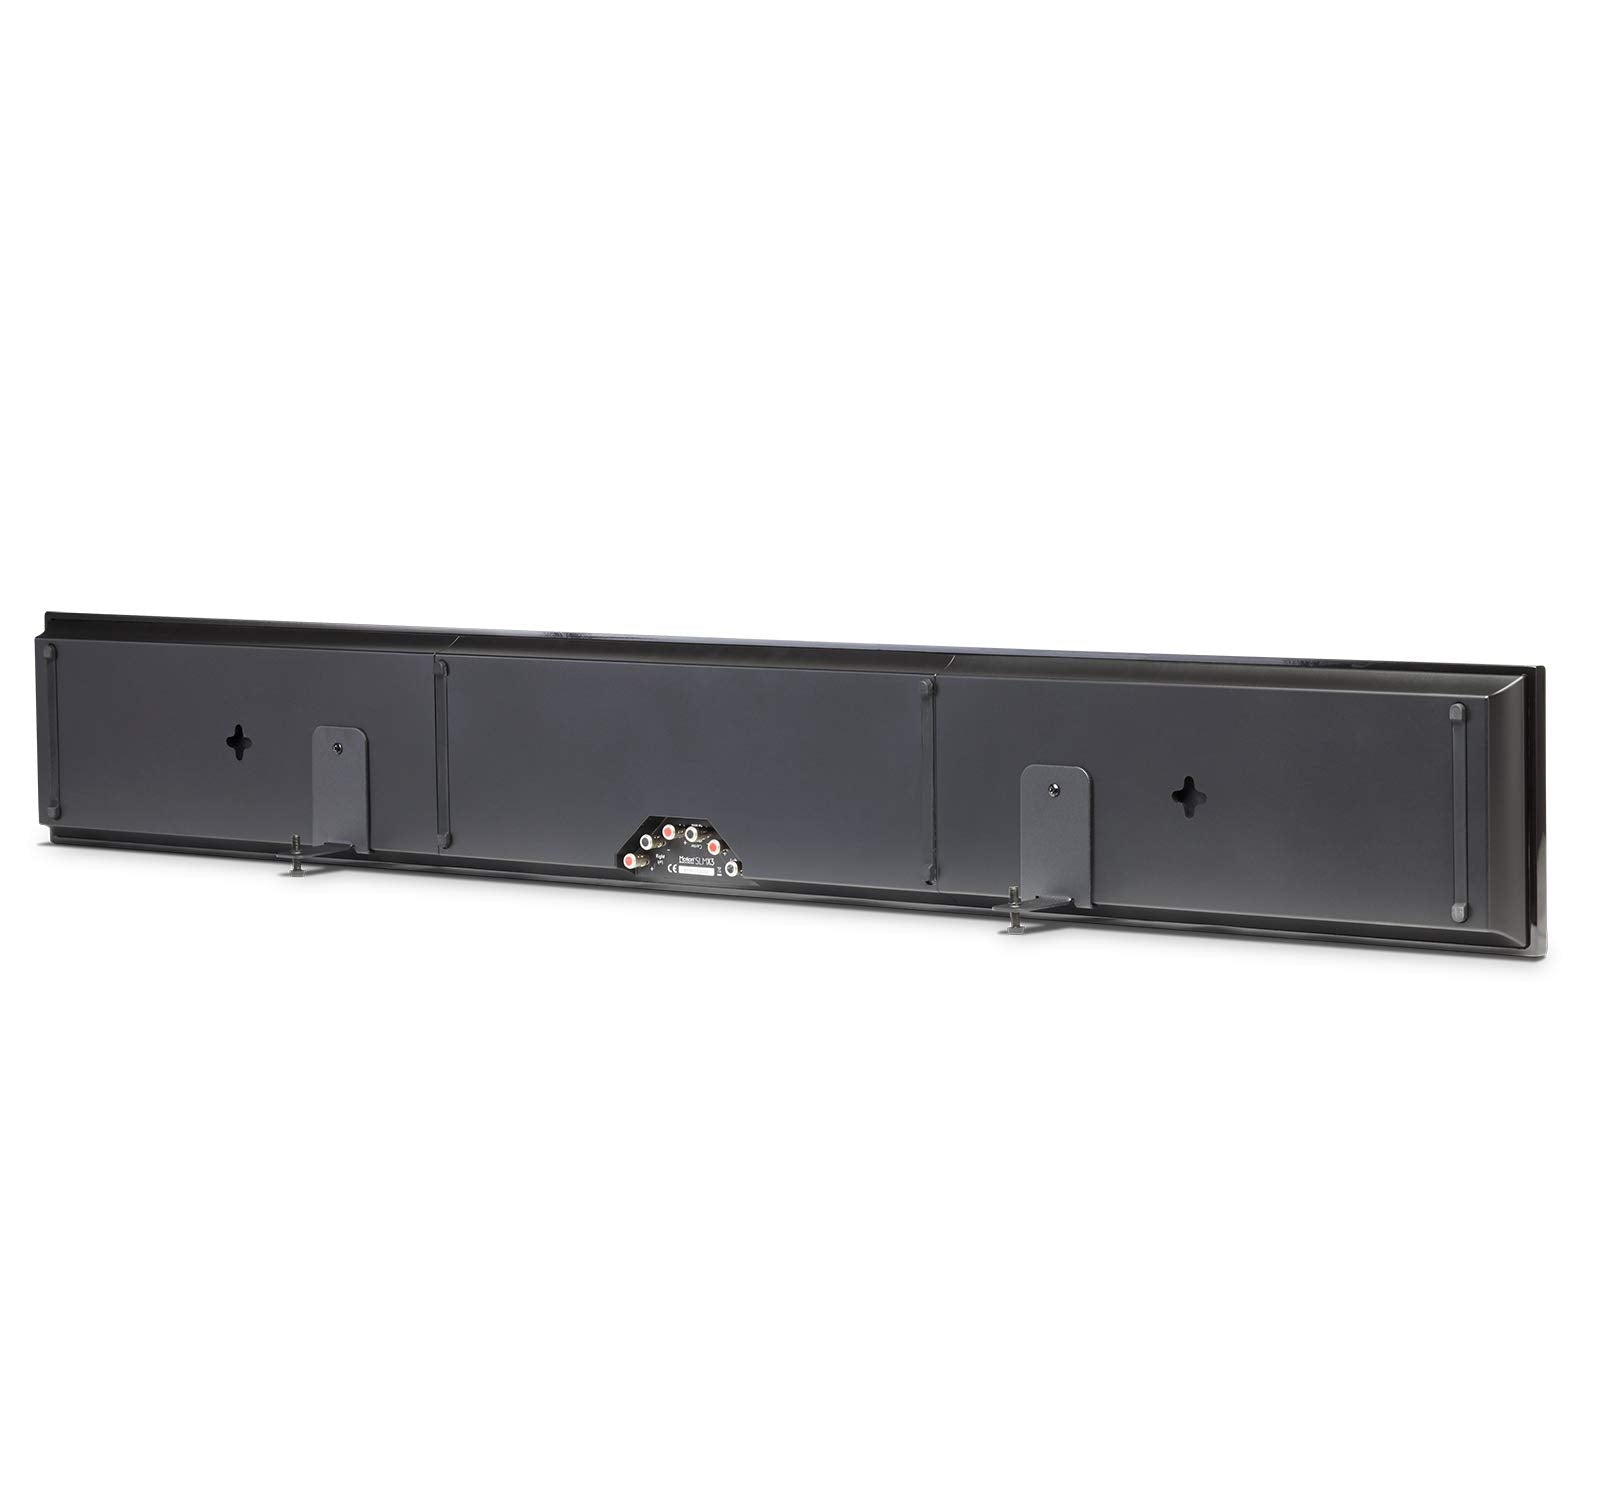 MartinLogan Motion SLM X3 Ultra-Slim 3-Channel Passive Soundbar - Black